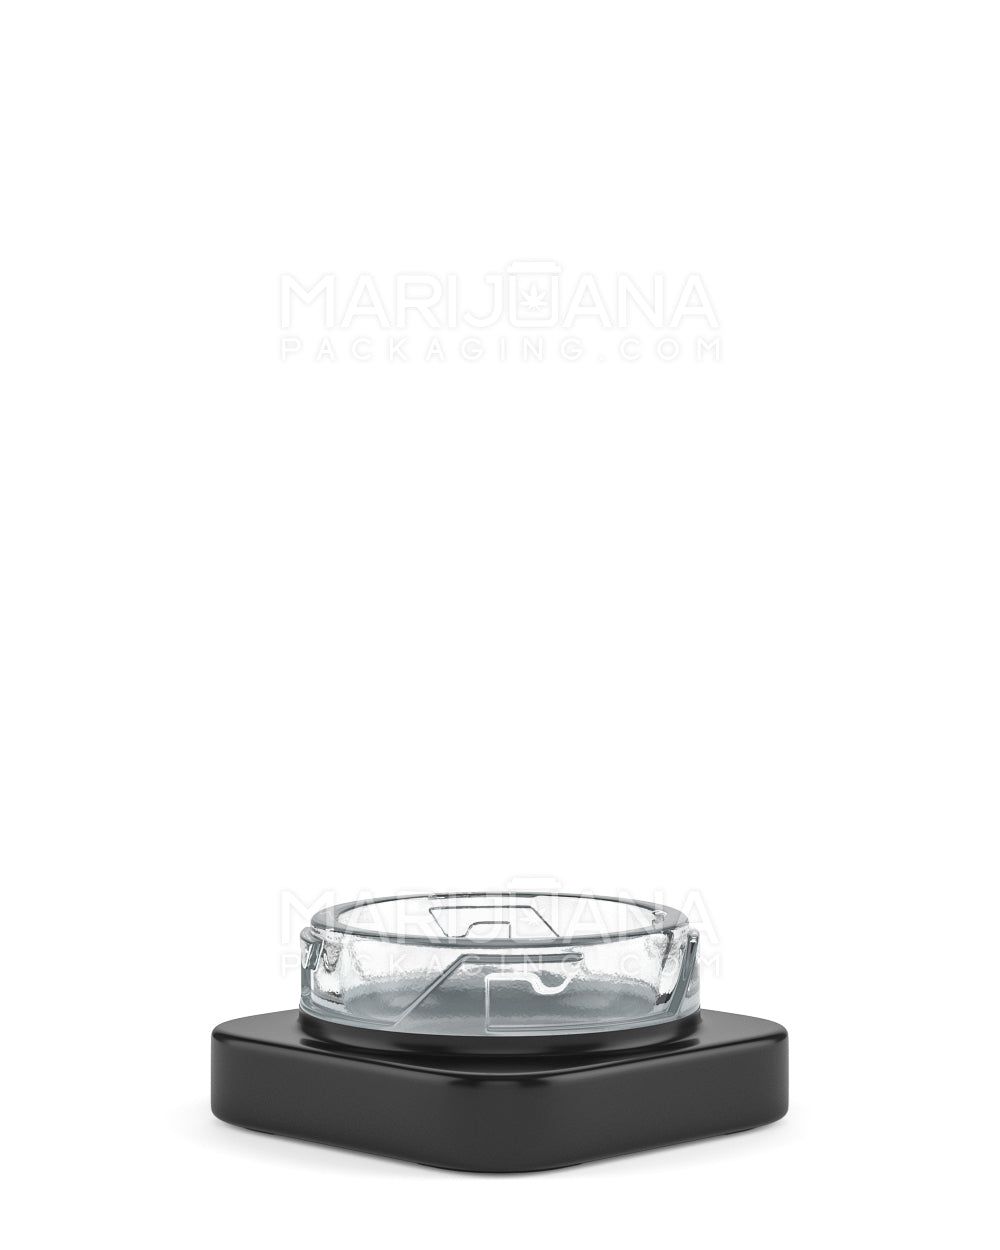 Child Resistant | Qube Black Glass Concentrate Jar w/ White Interior & Black Cap | 38mm - 9mL - 250 Count - 3